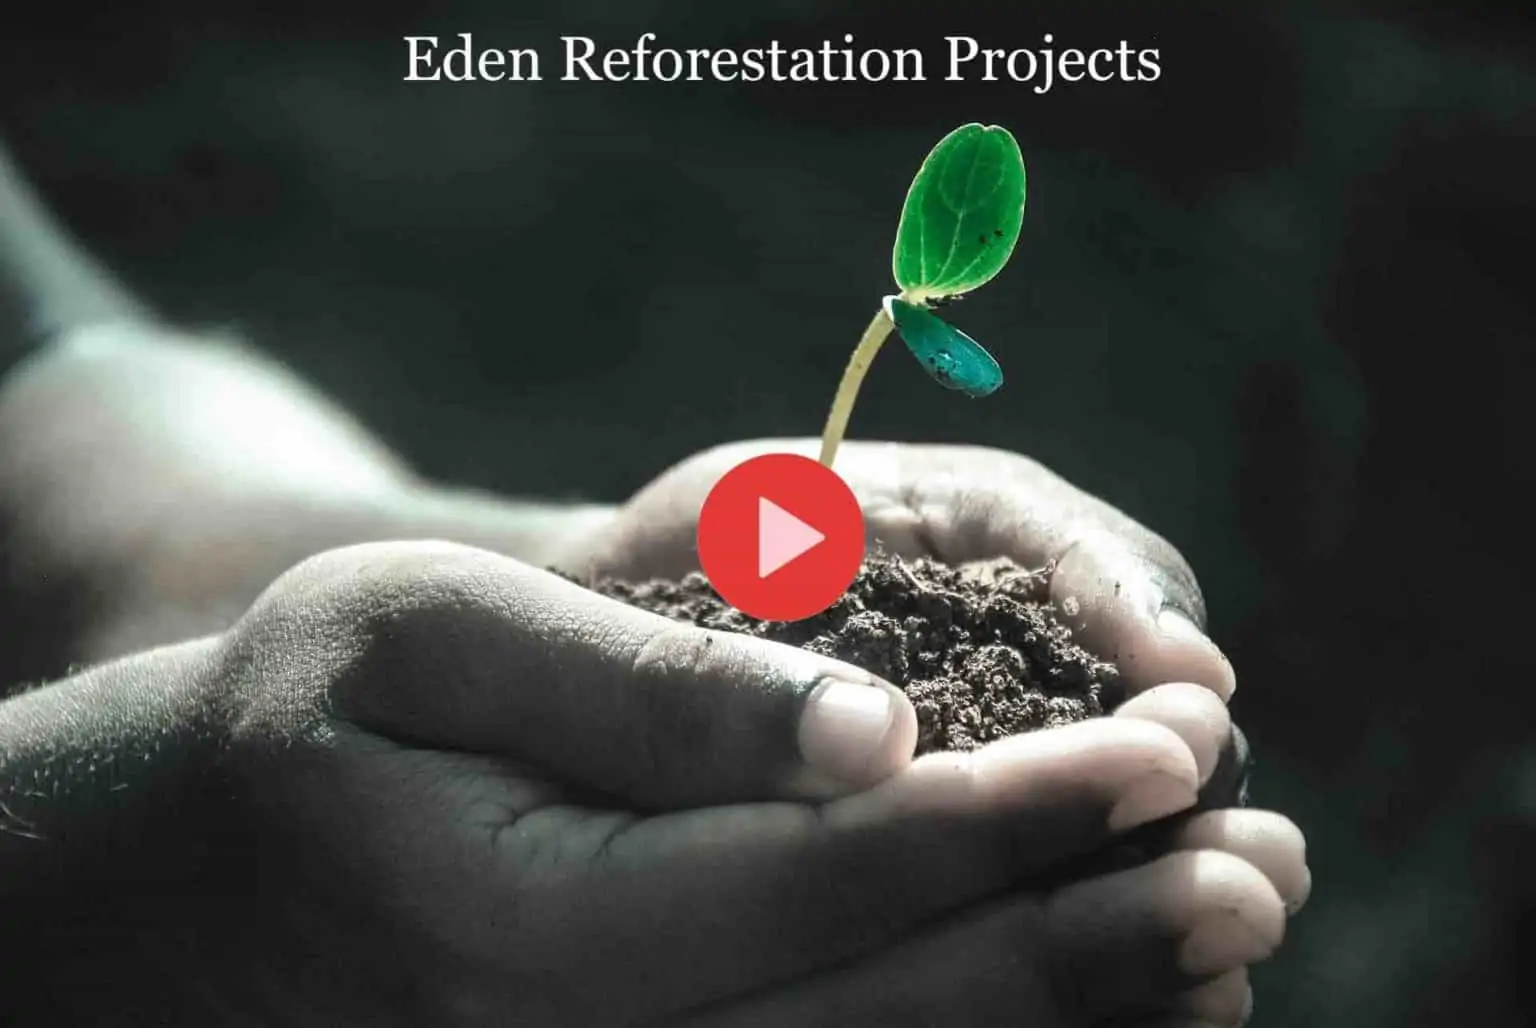 Eden Reforestation Project copy 1536x1028 1